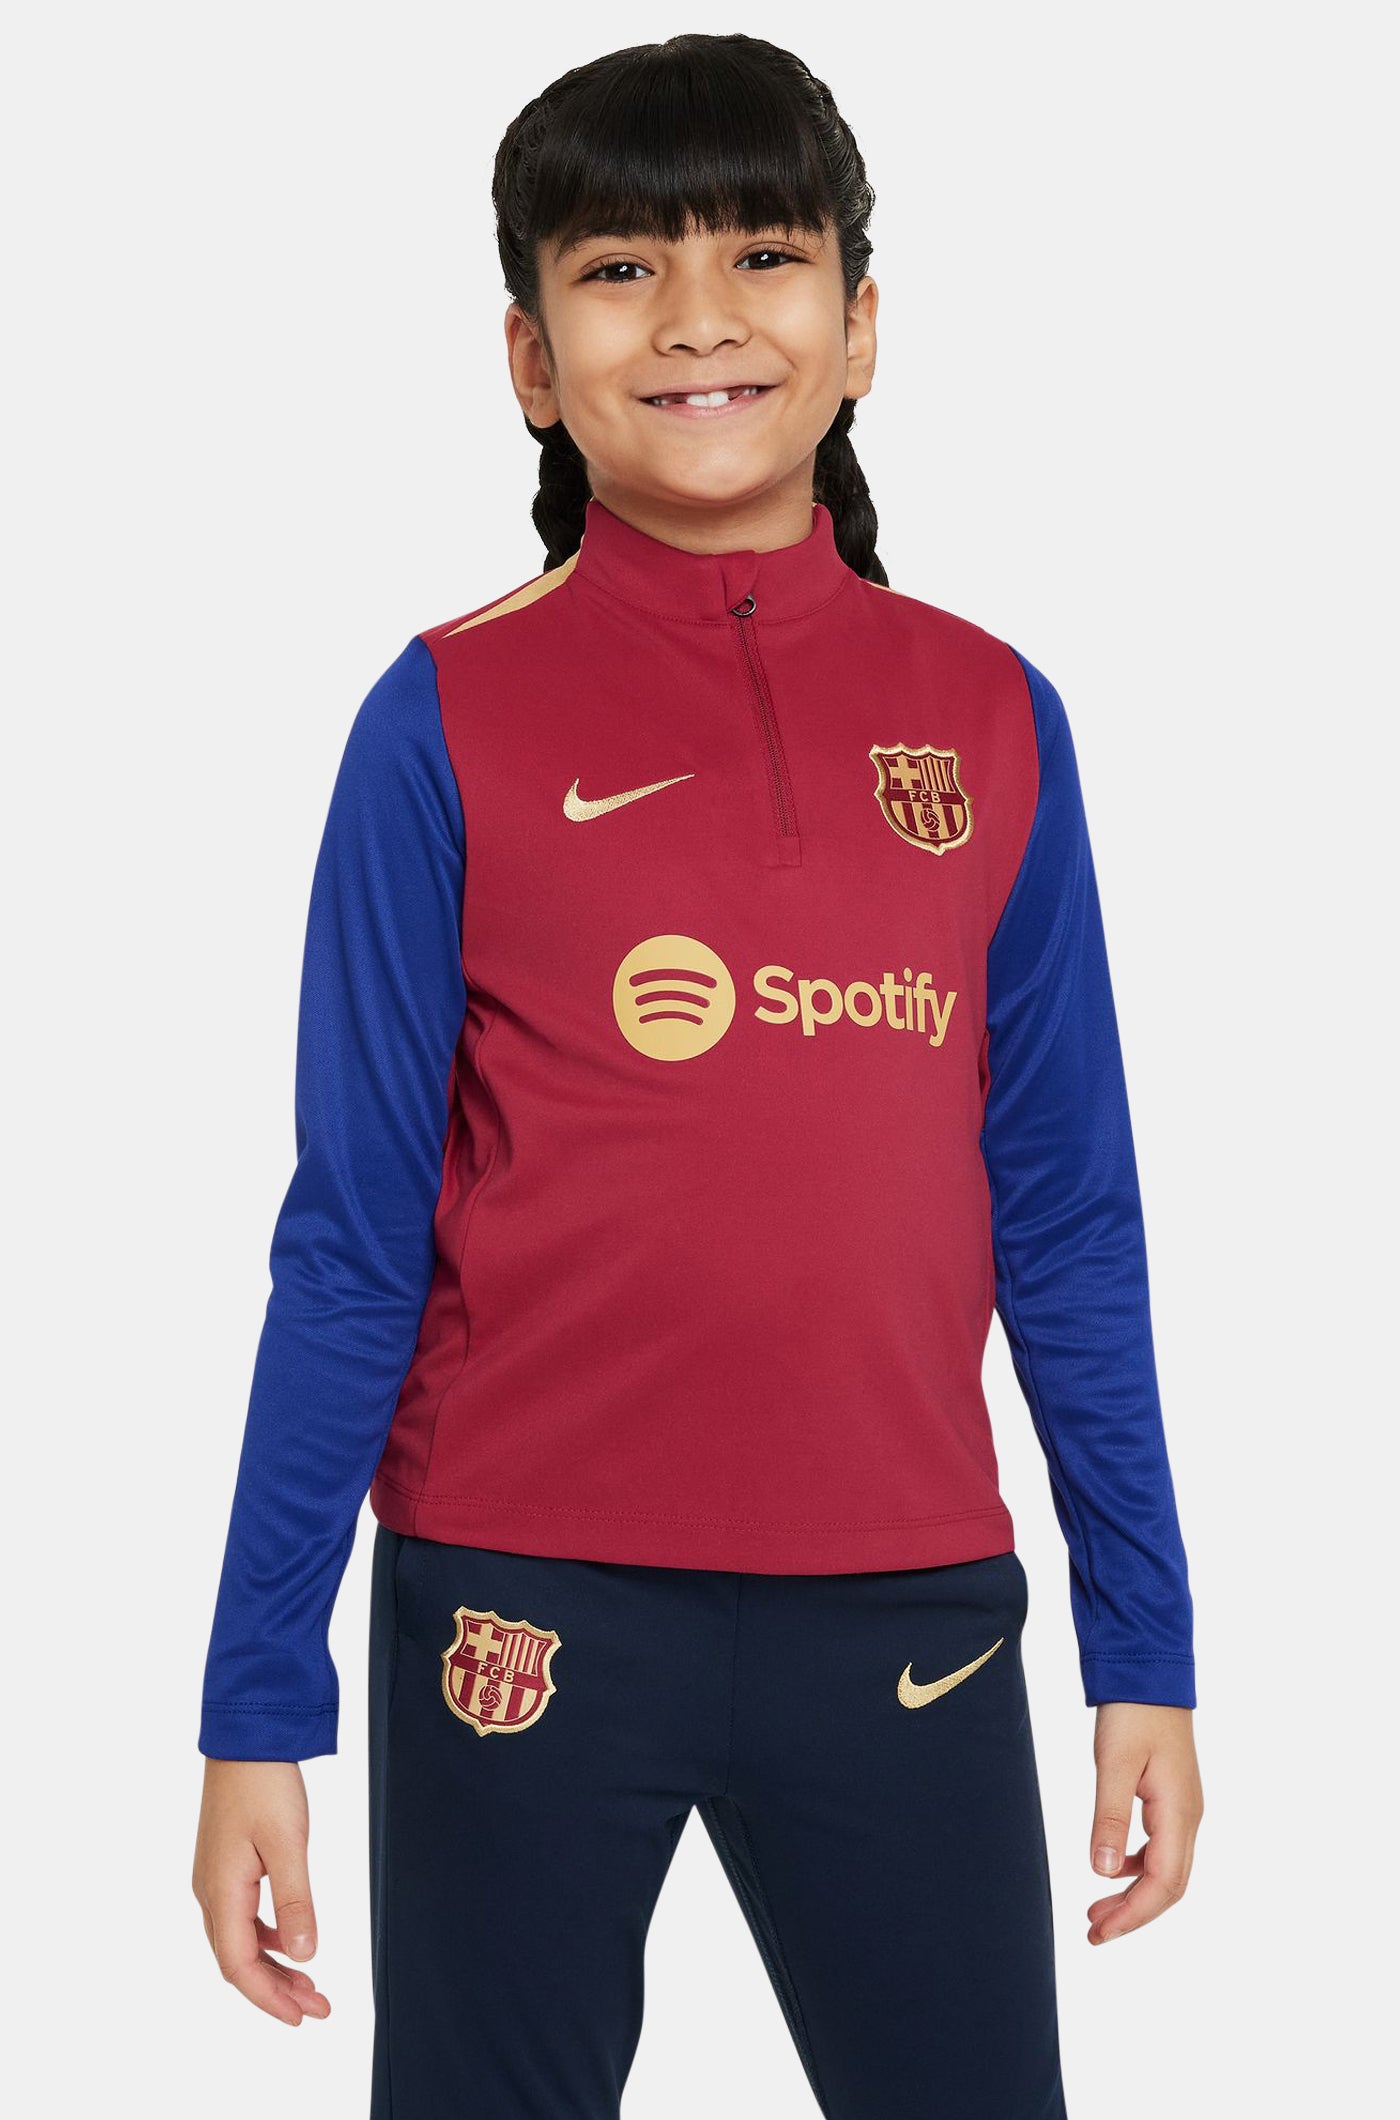 FC Barcelona garnet training Camp – kids sweatshirt 23/24 Spotify Barça Official - Younger Store Nou